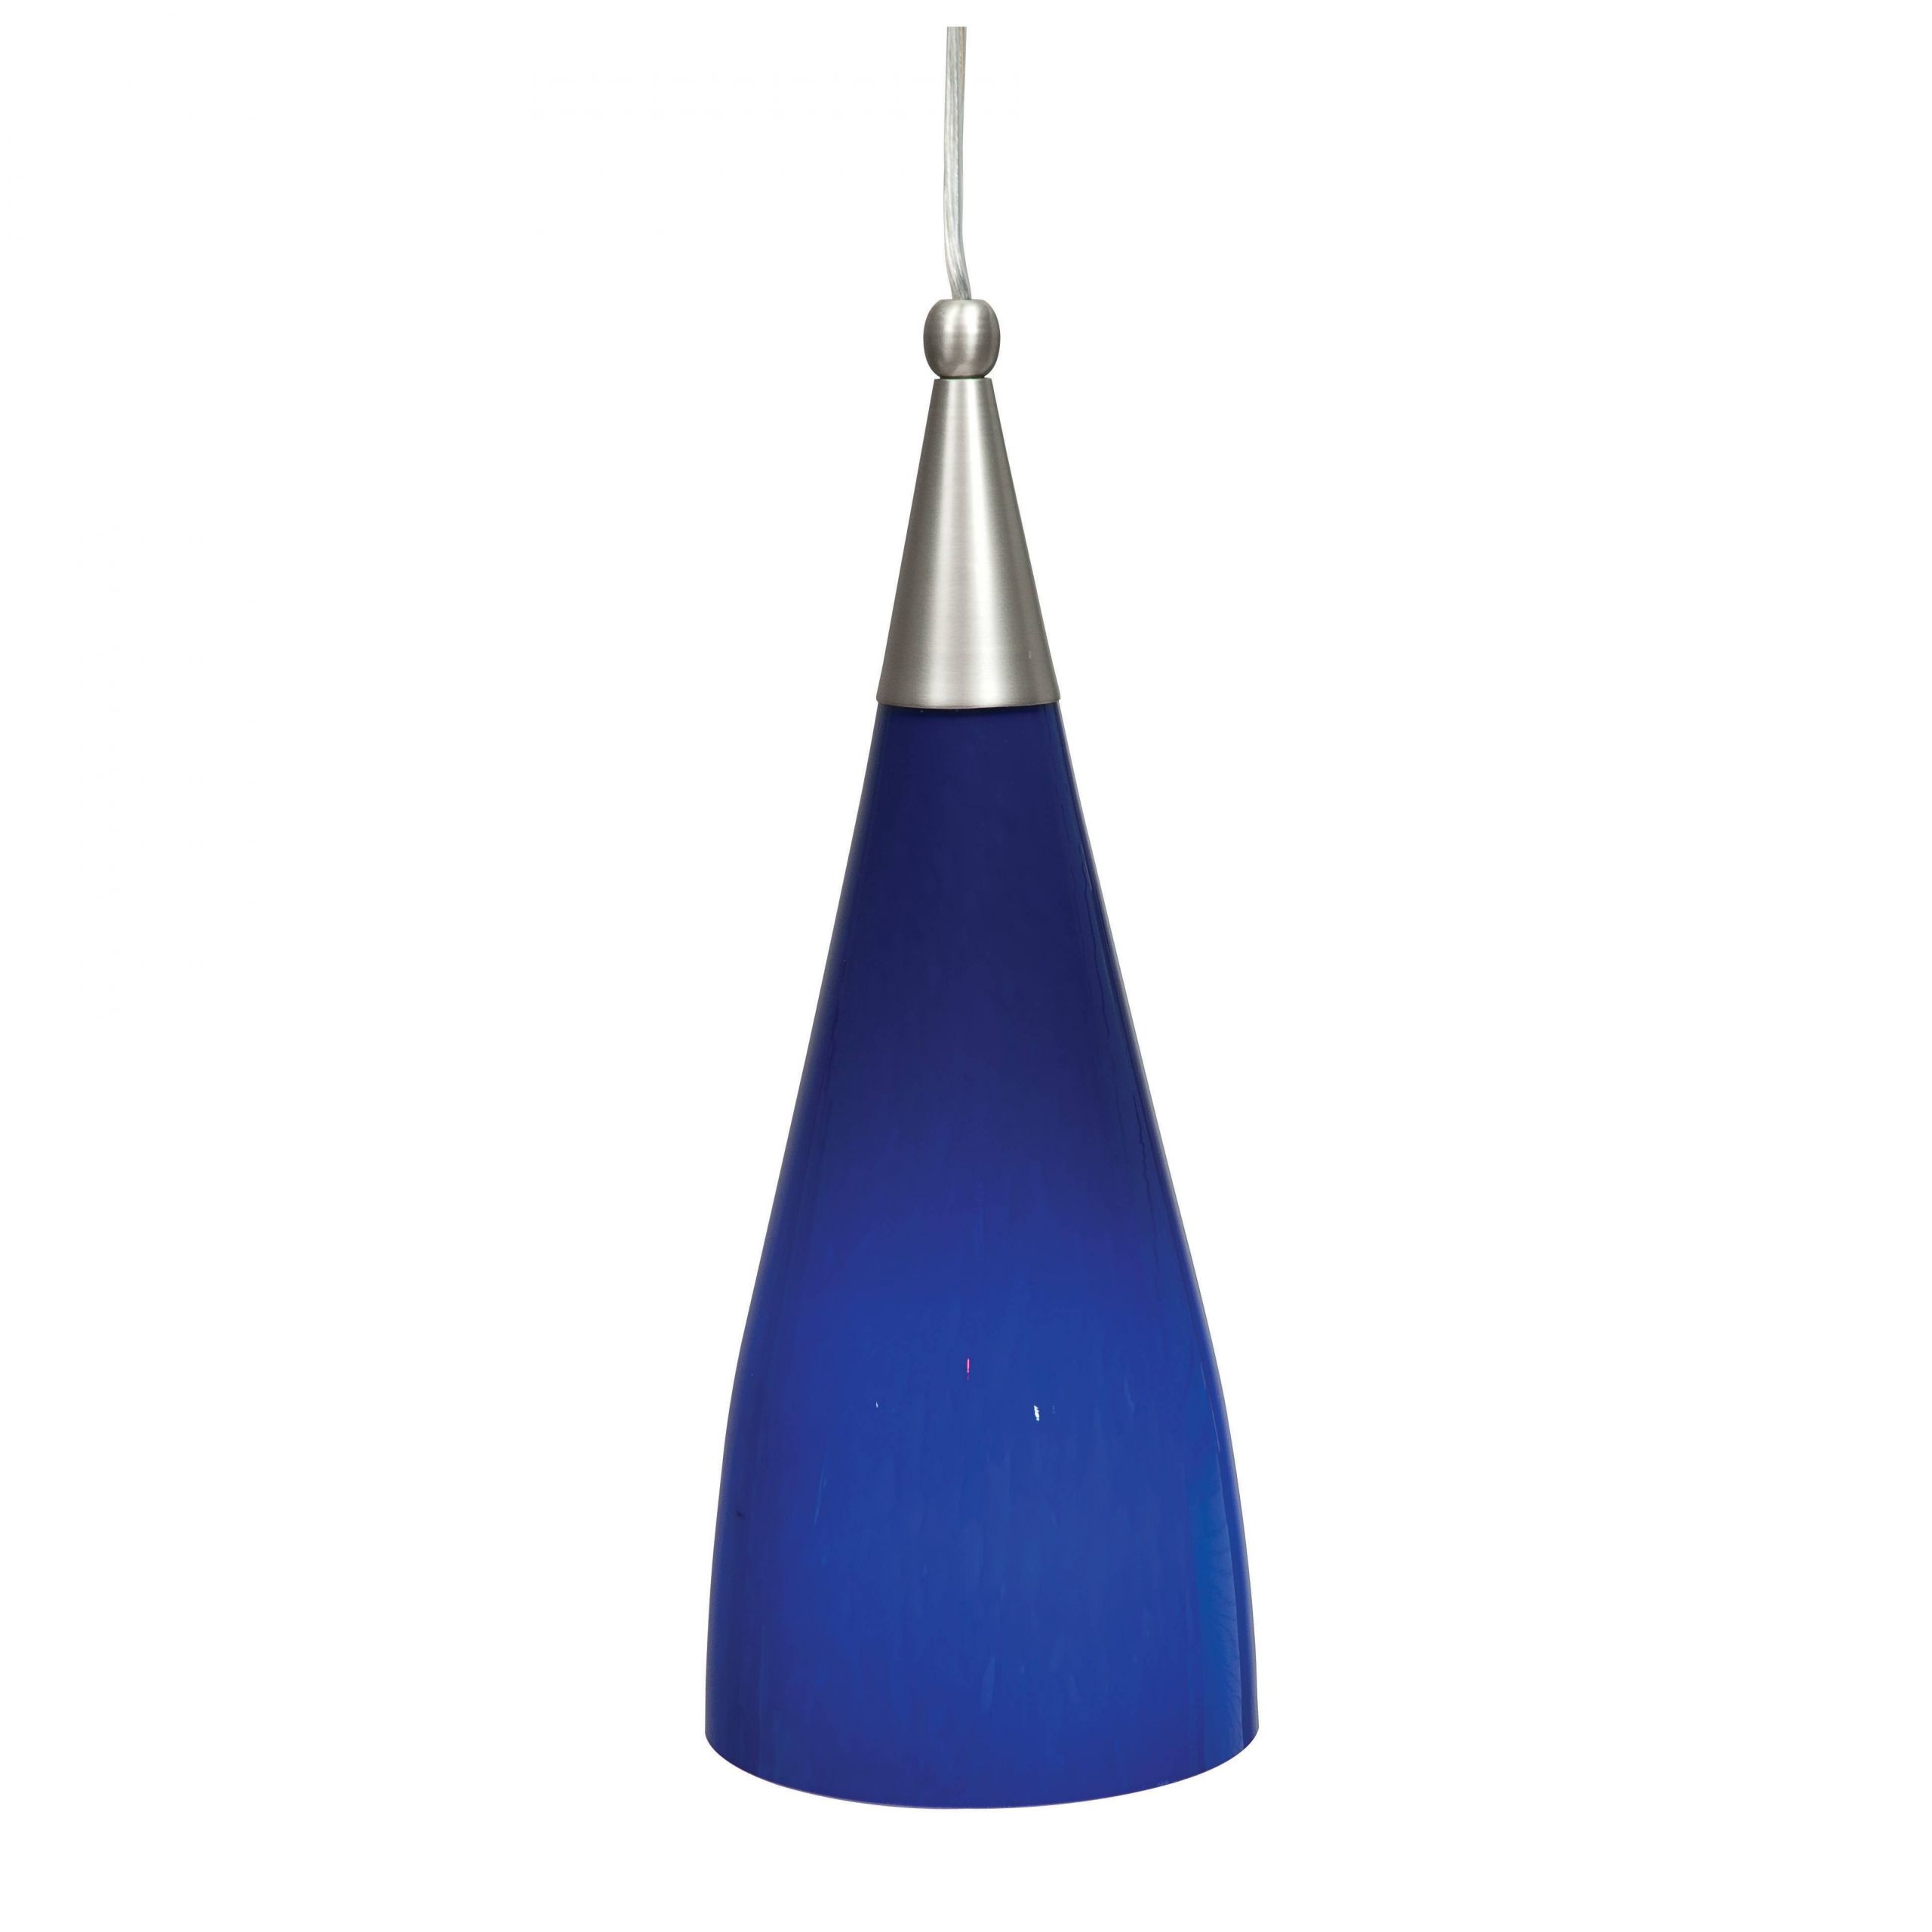 Blue Pendant Lights Kitchen
 15 Ideas of Cobalt Blue Mini Pendant Lights